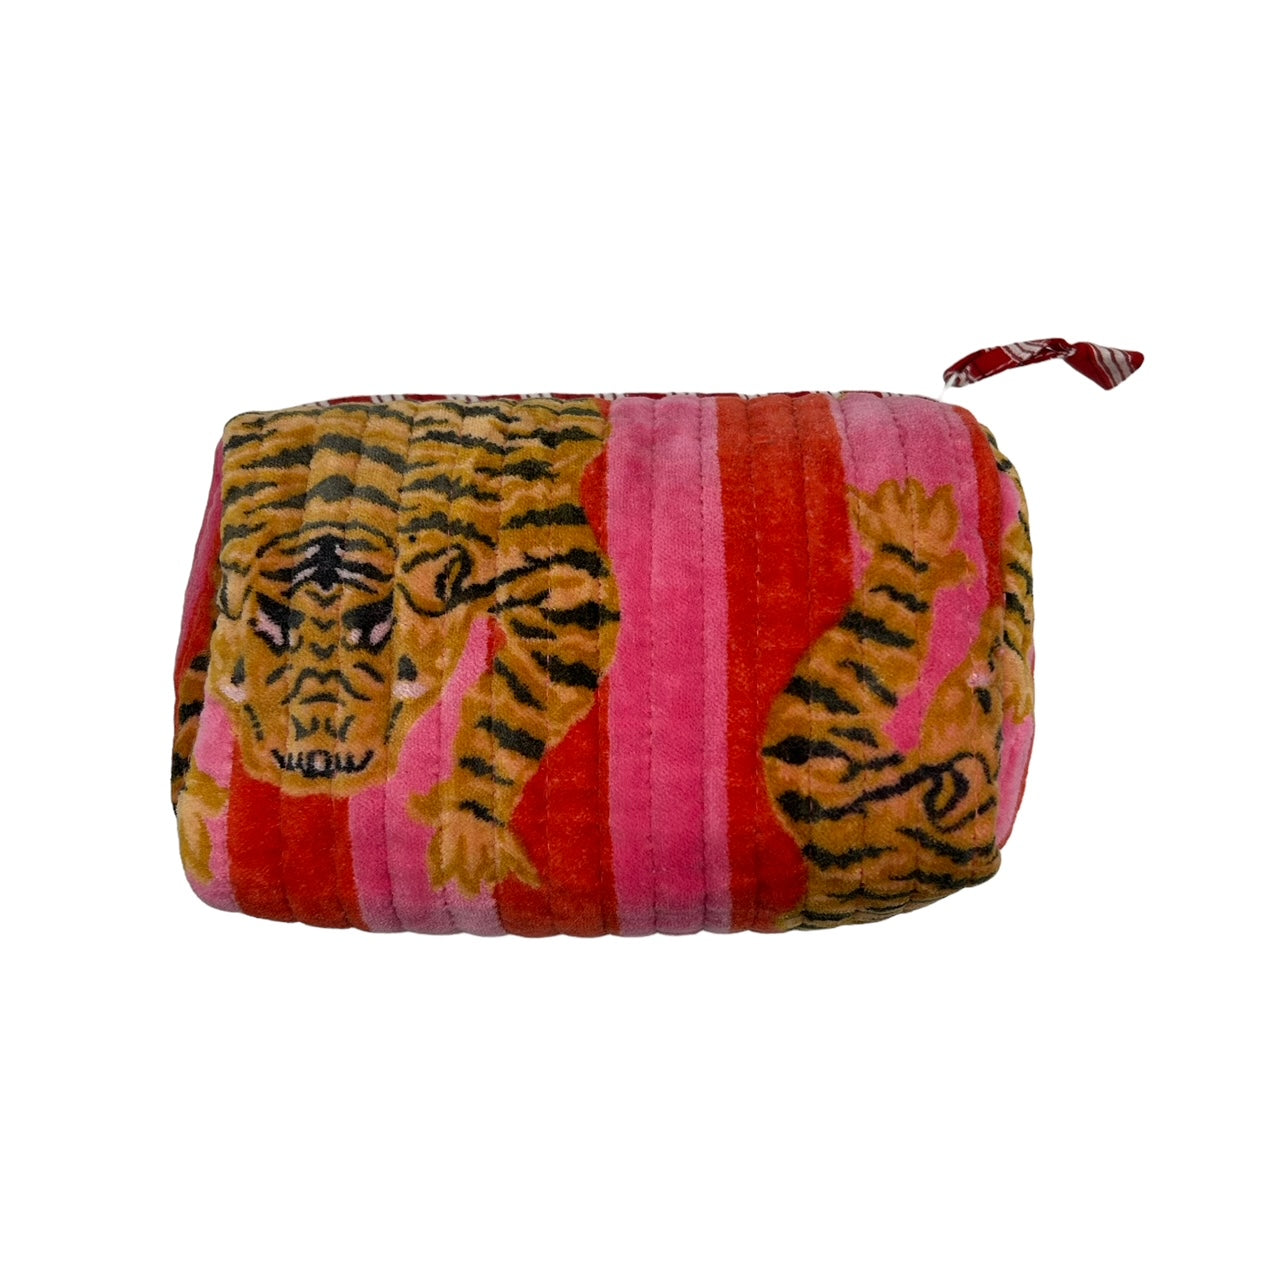 Madagascar velvet make-up bag in pink, large and small